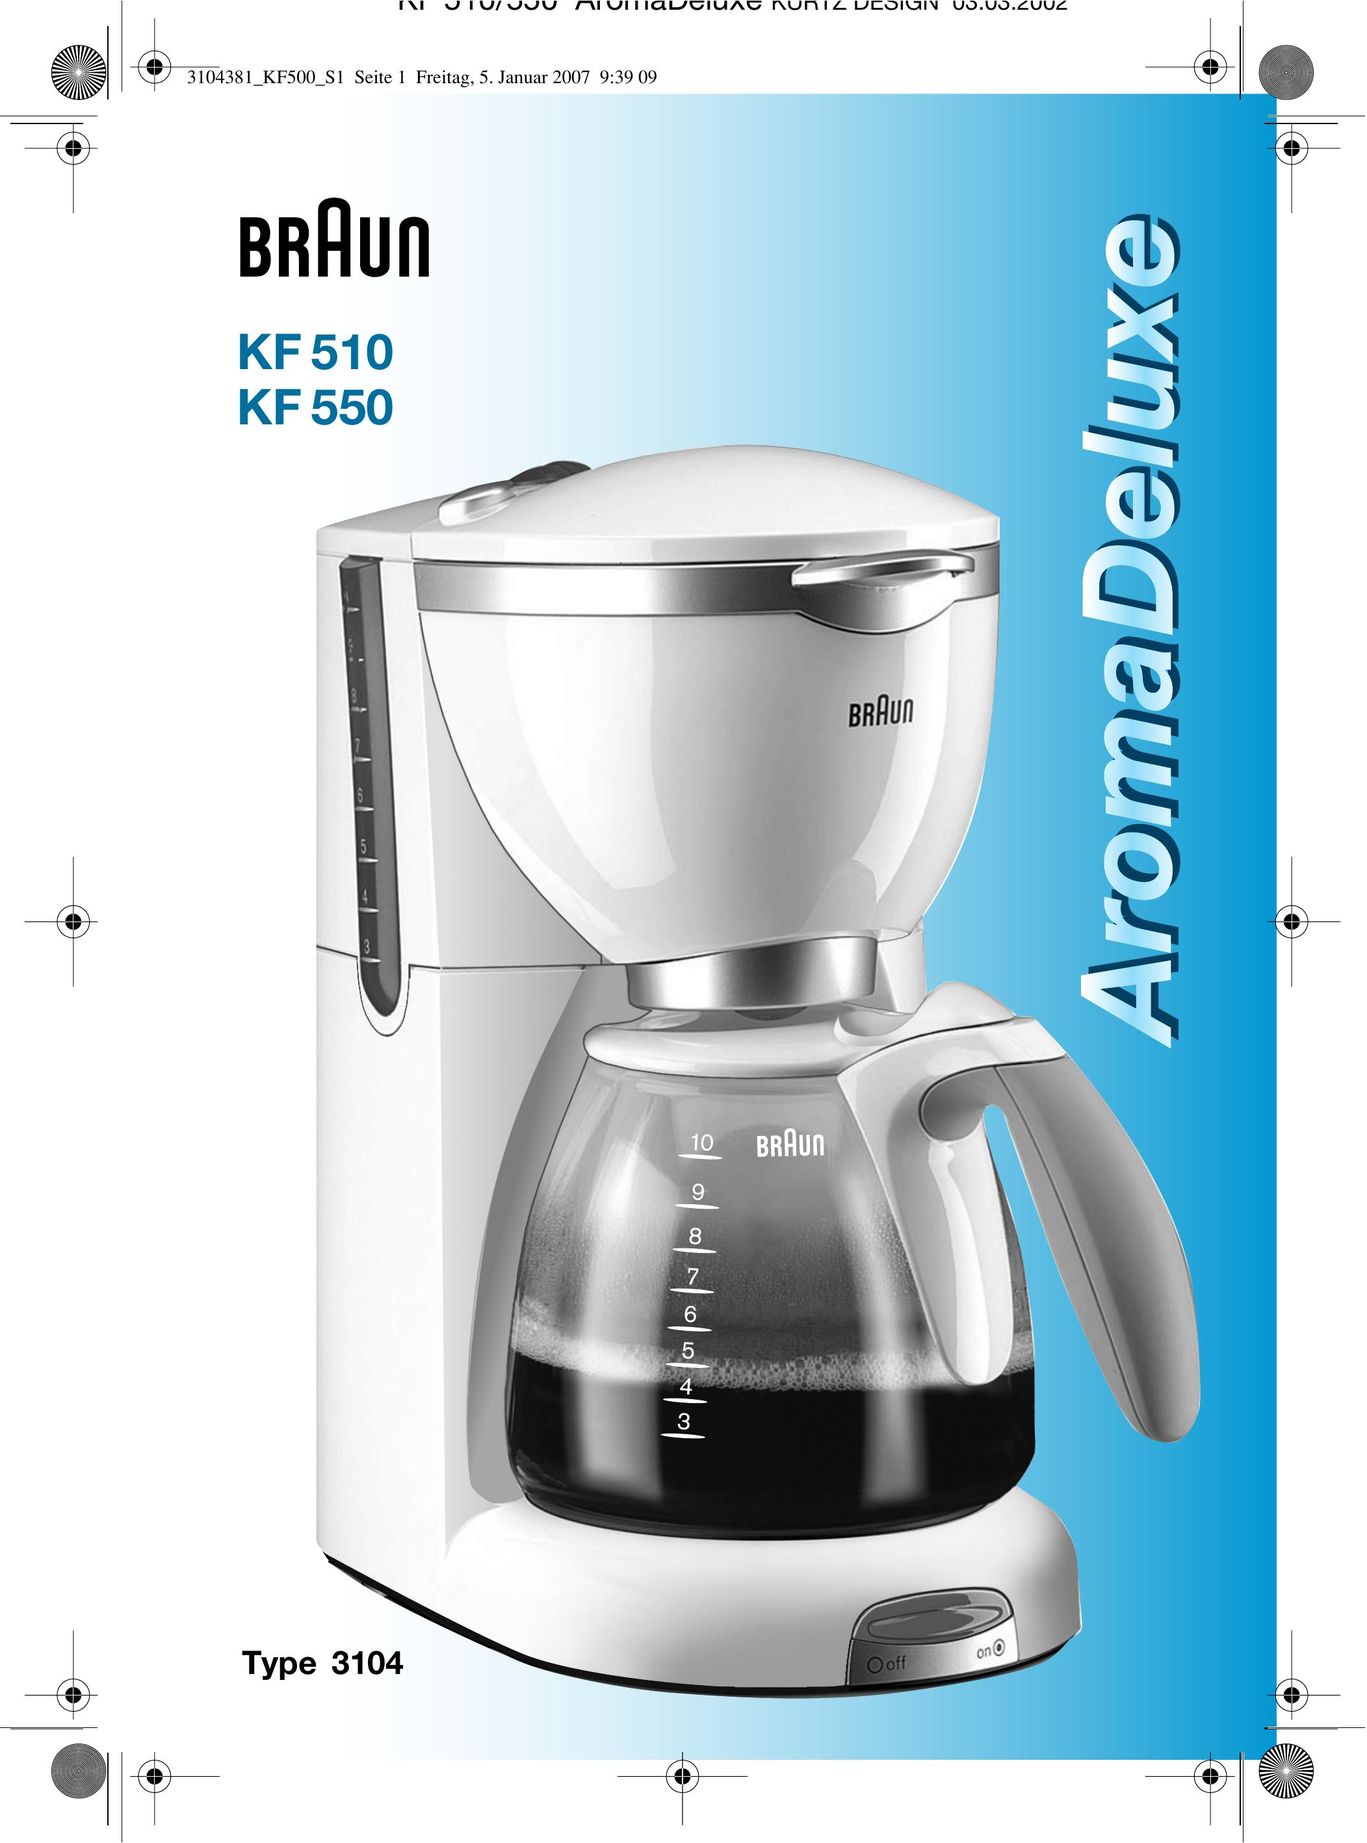 Braun KF550 Coffeemaker User Manual